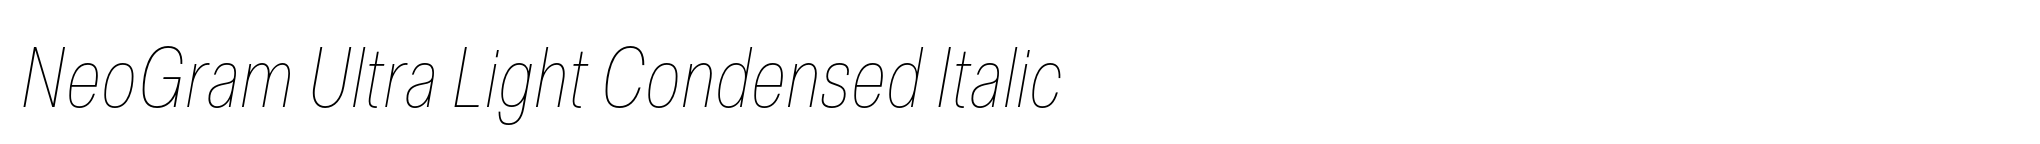 NeoGram Ultra Light Condensed Italic image